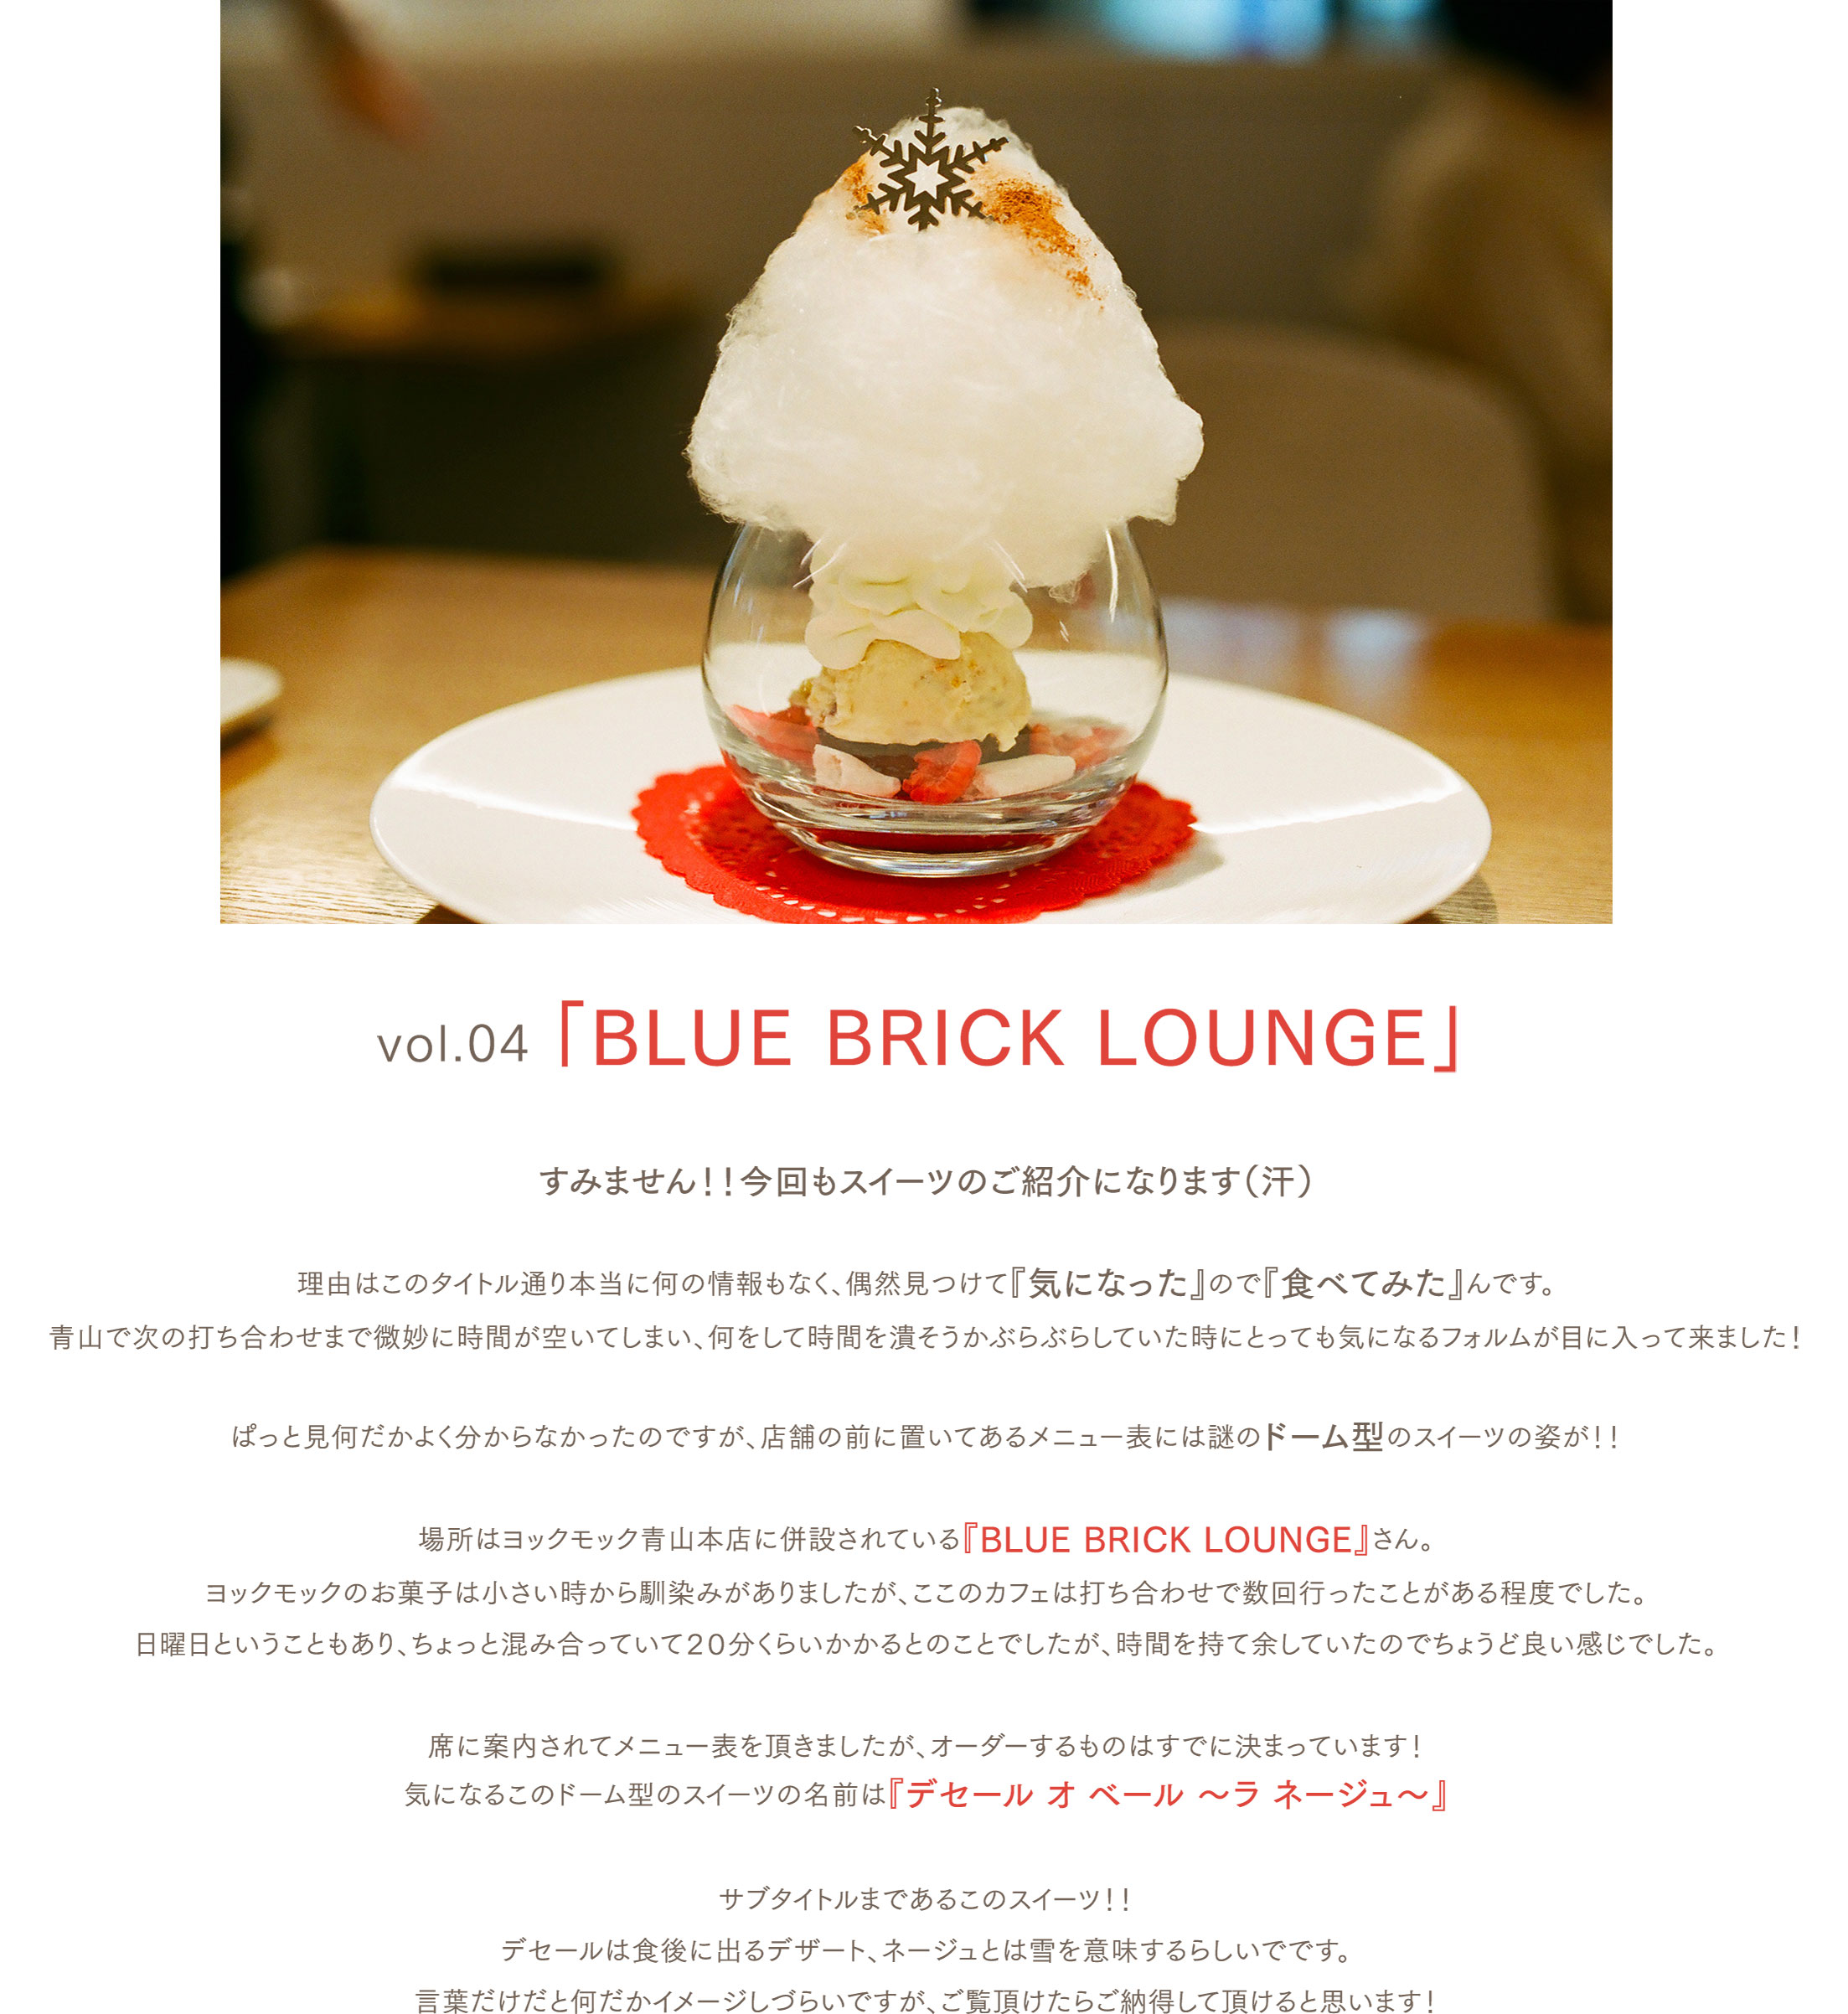 vol.04 「BLUE BRICK LOUNGE」